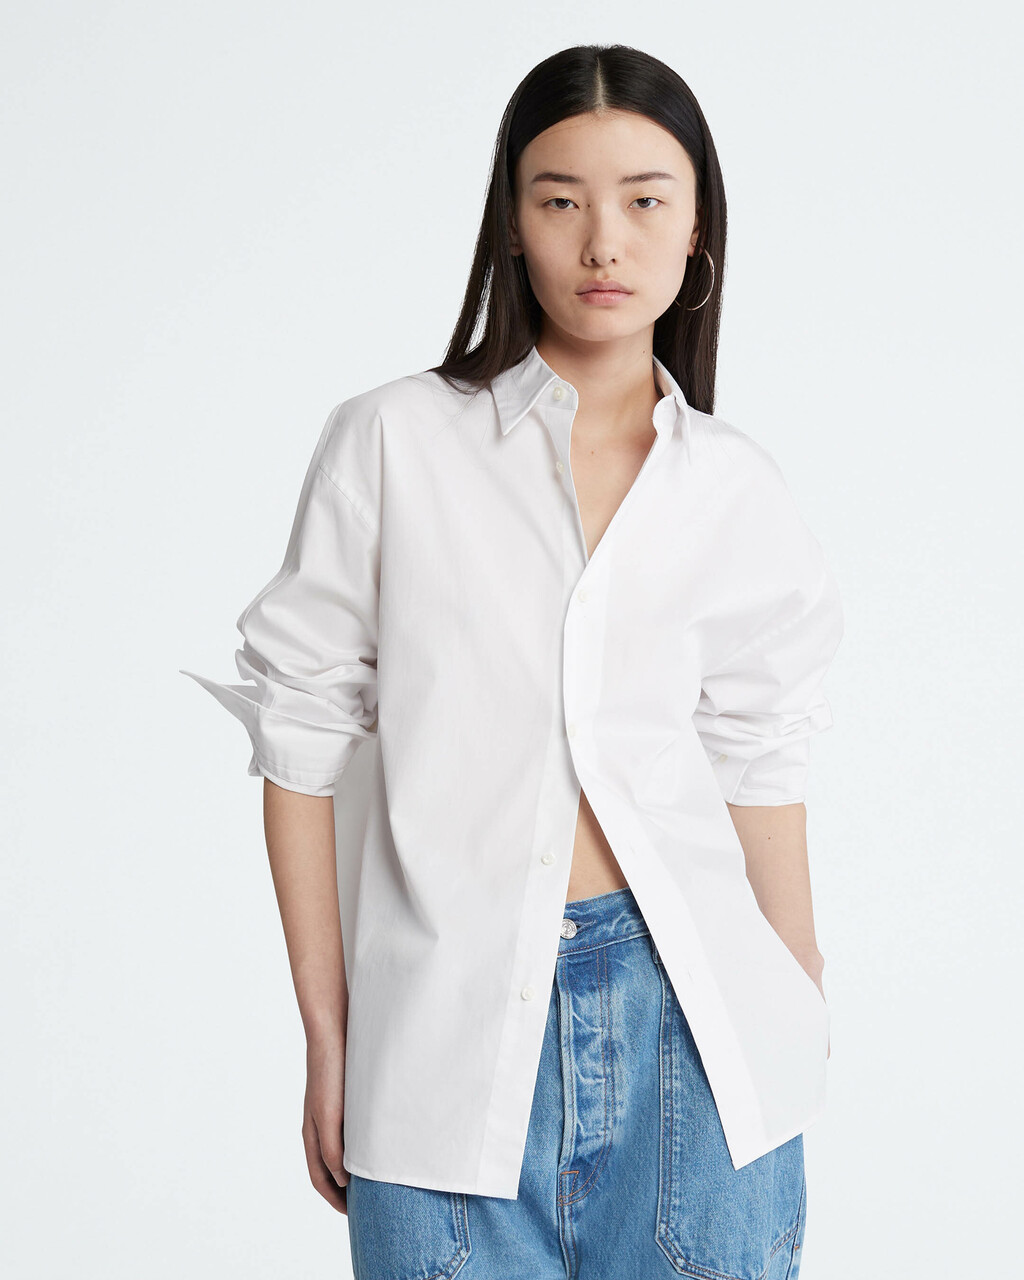 Standards Oversized Cotton Button-Down Shirt, Brilliant White, hi-res